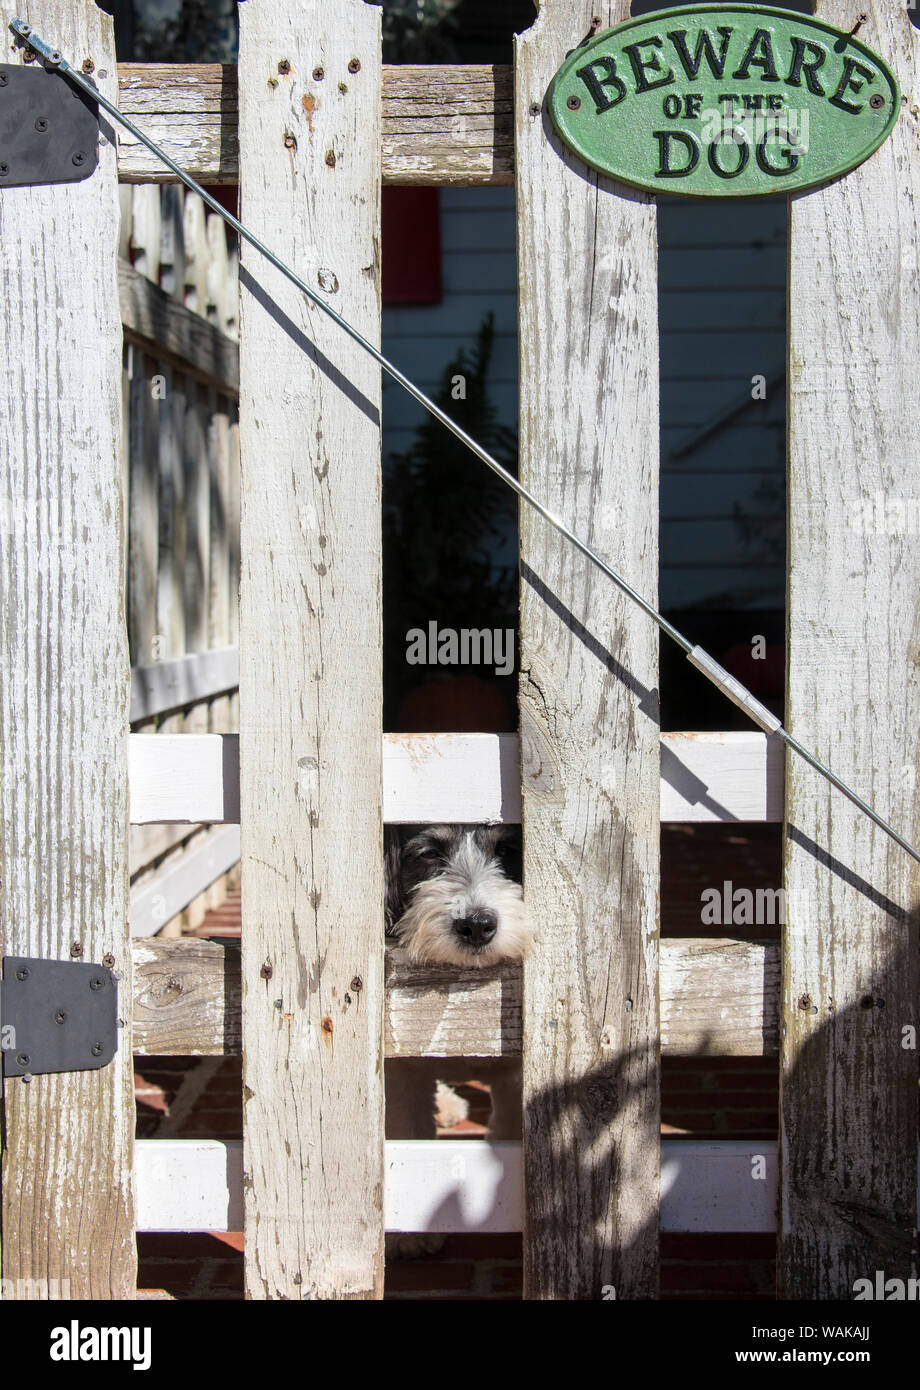 USA, Georgia. Humorous scene of innocent tame puppy under 'Beware of Dog' sign Stock Photo